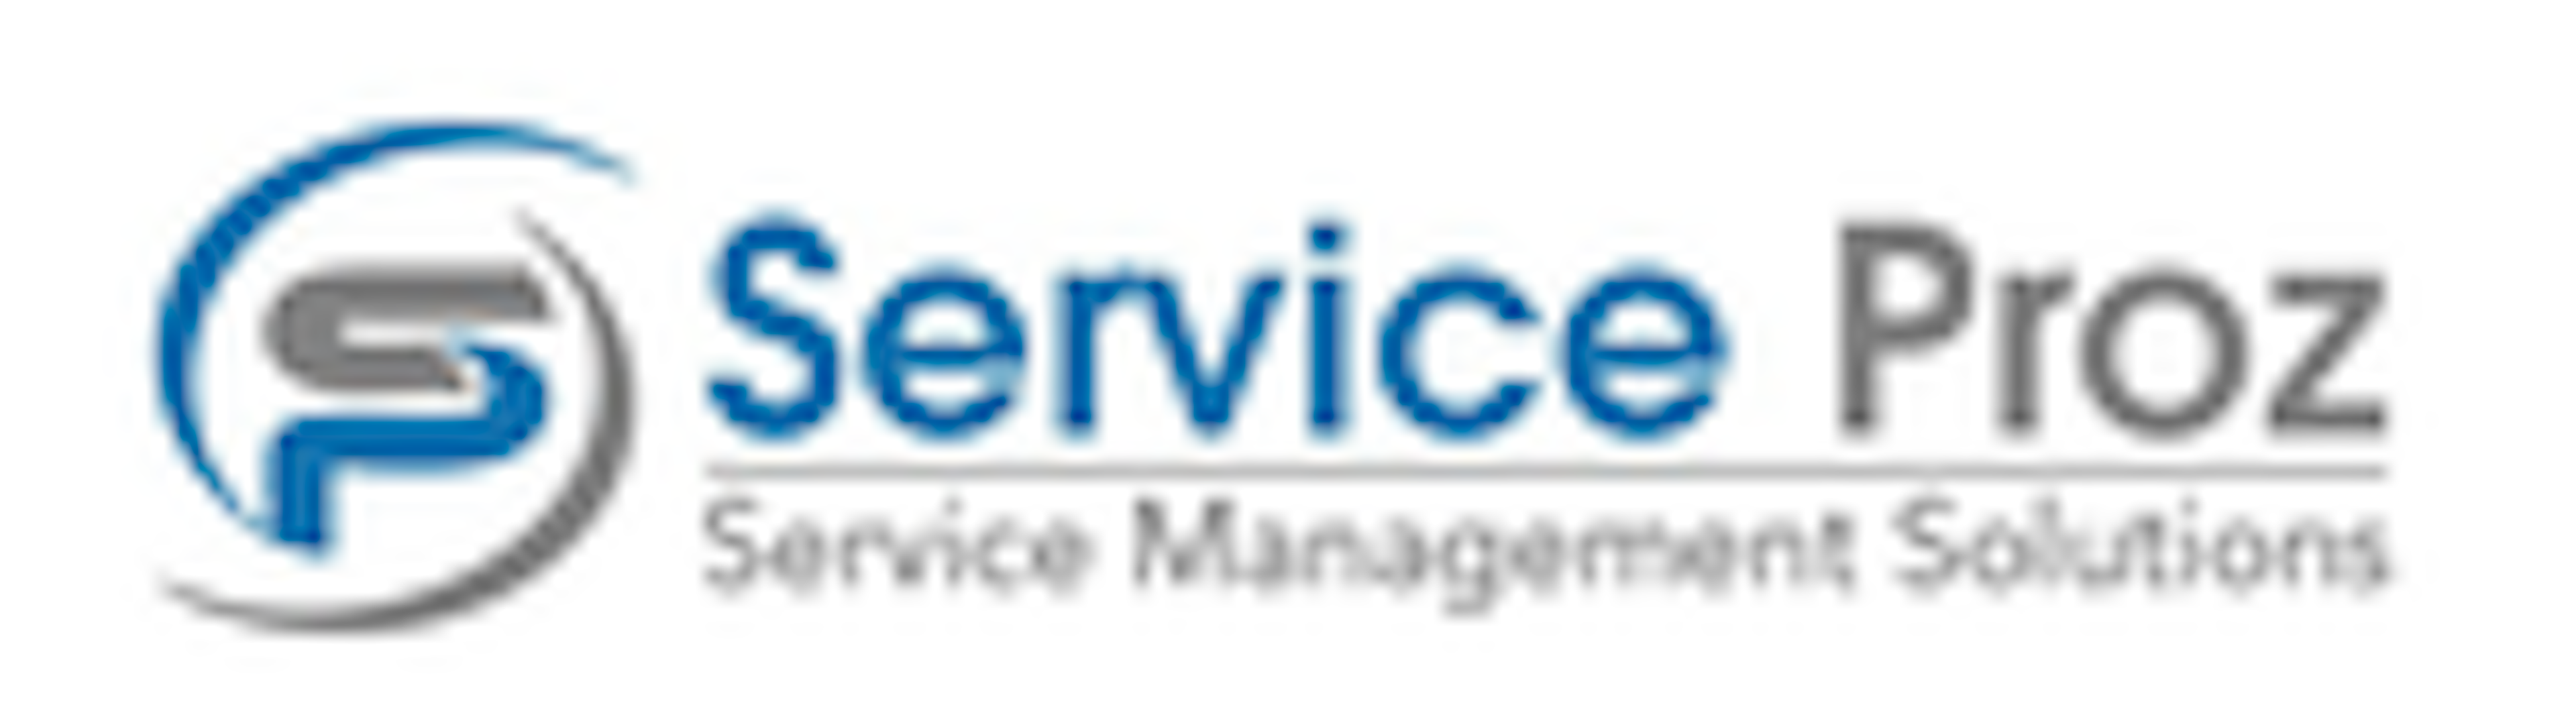 Service Proz Logo